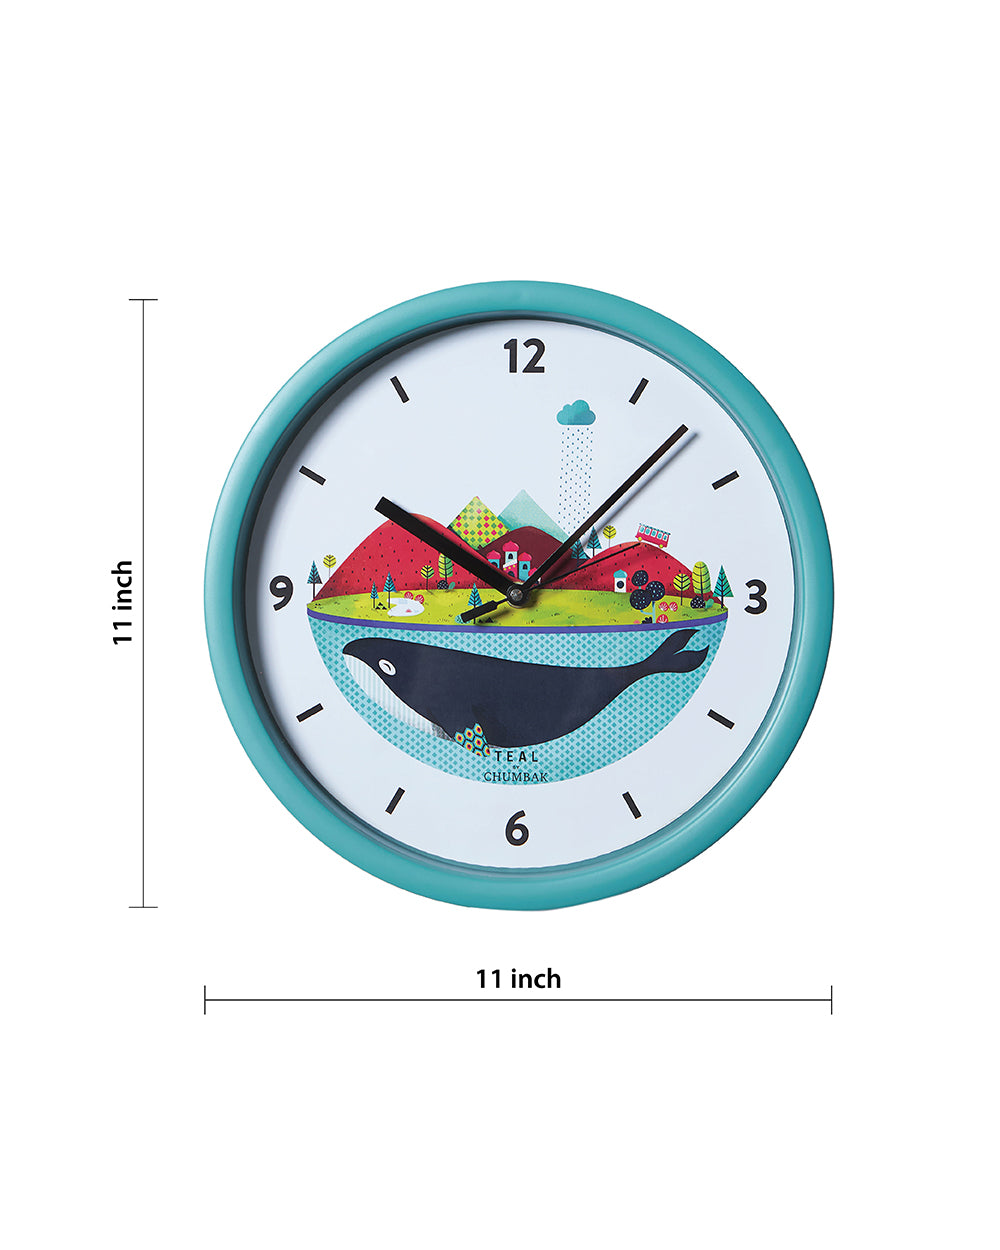 Teal by Chumbak | Globe Trotting Wall Clock | 11 inch